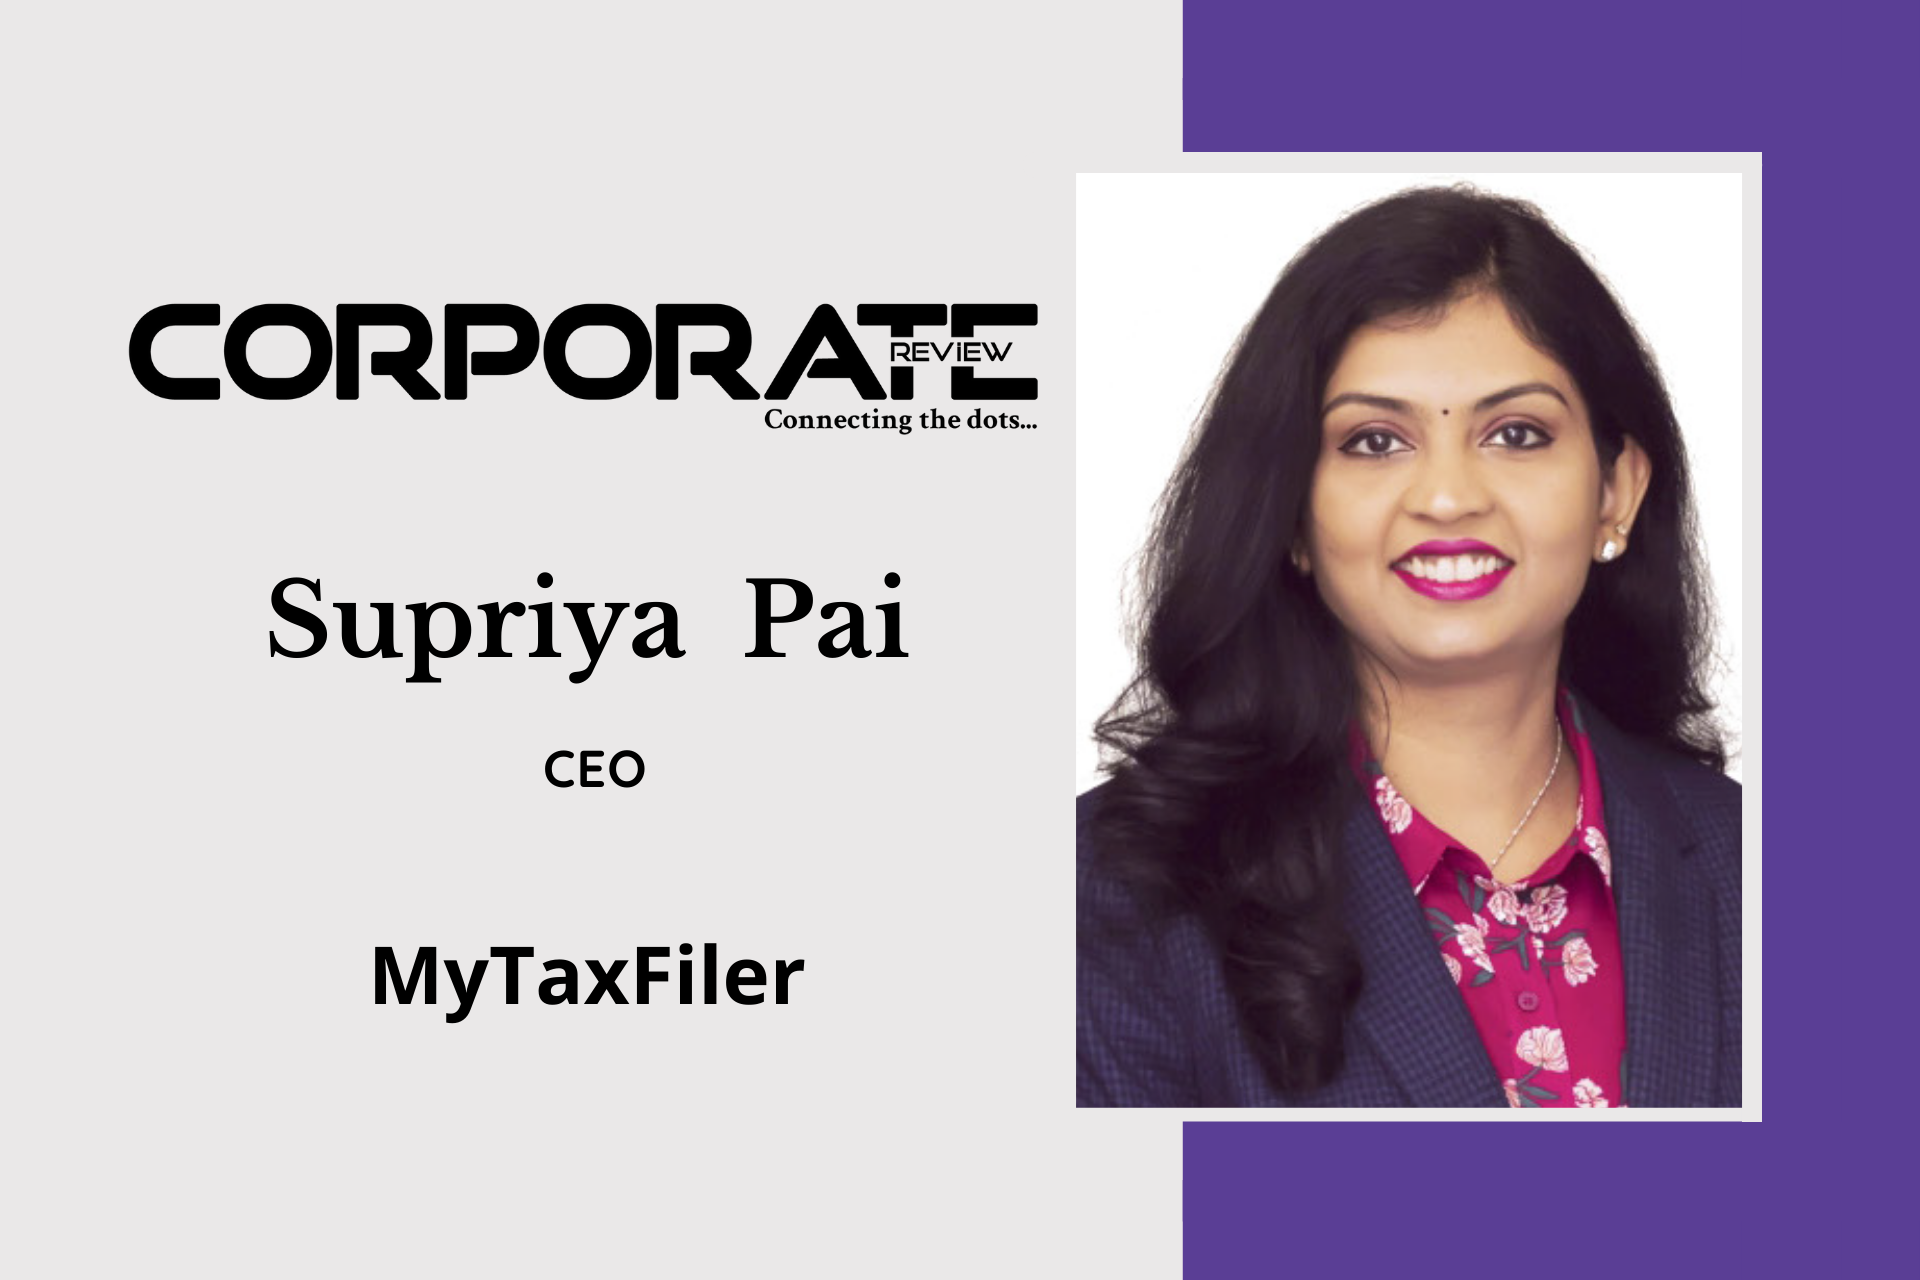 supriya-pai-the-woman-leader-revolutionizing-tax-filing-corporate-review